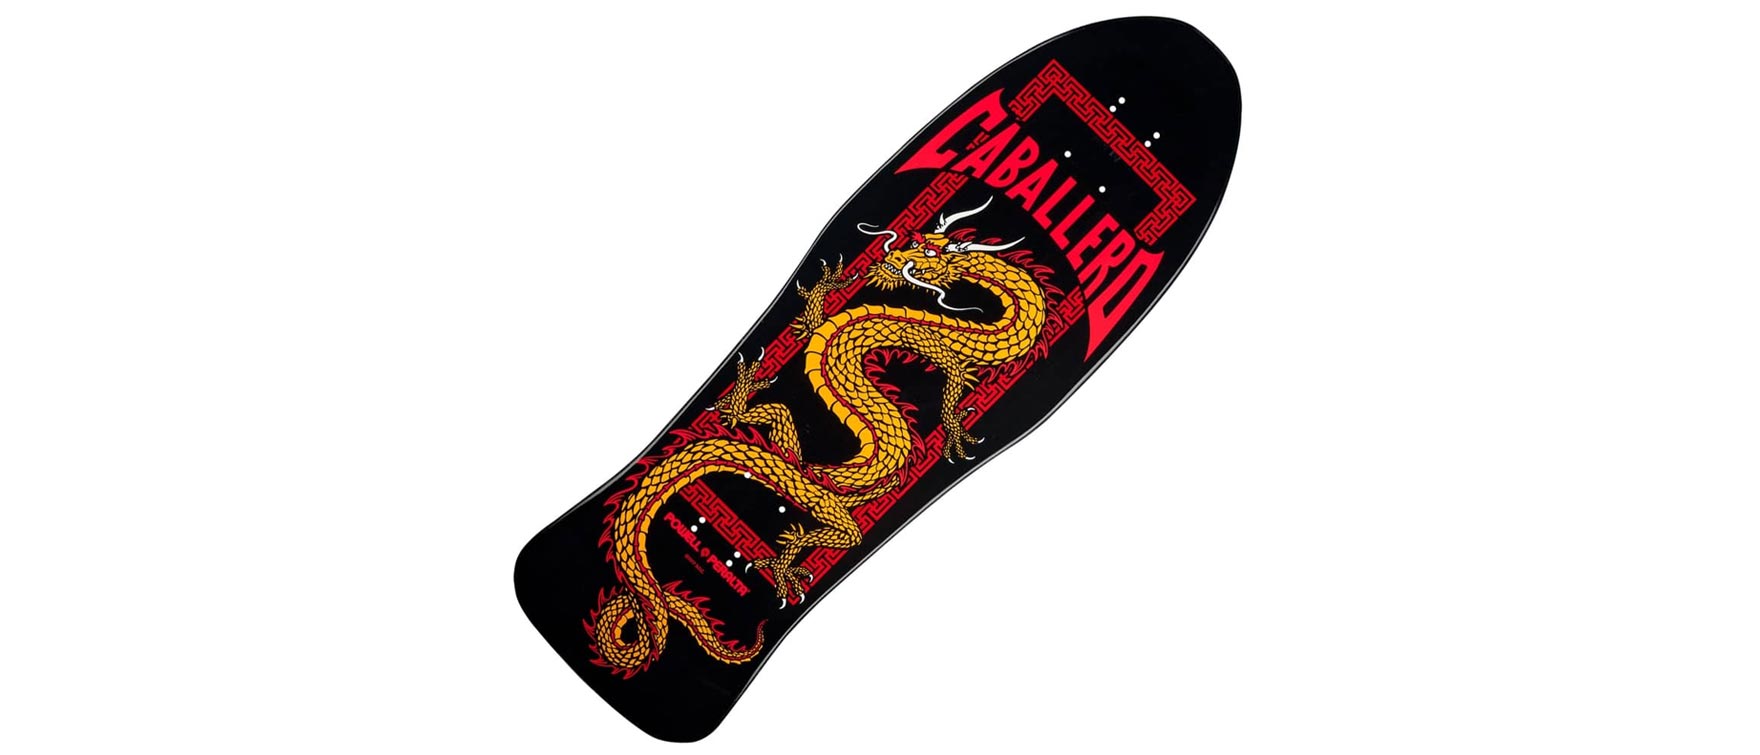 9. Powell Skateboards